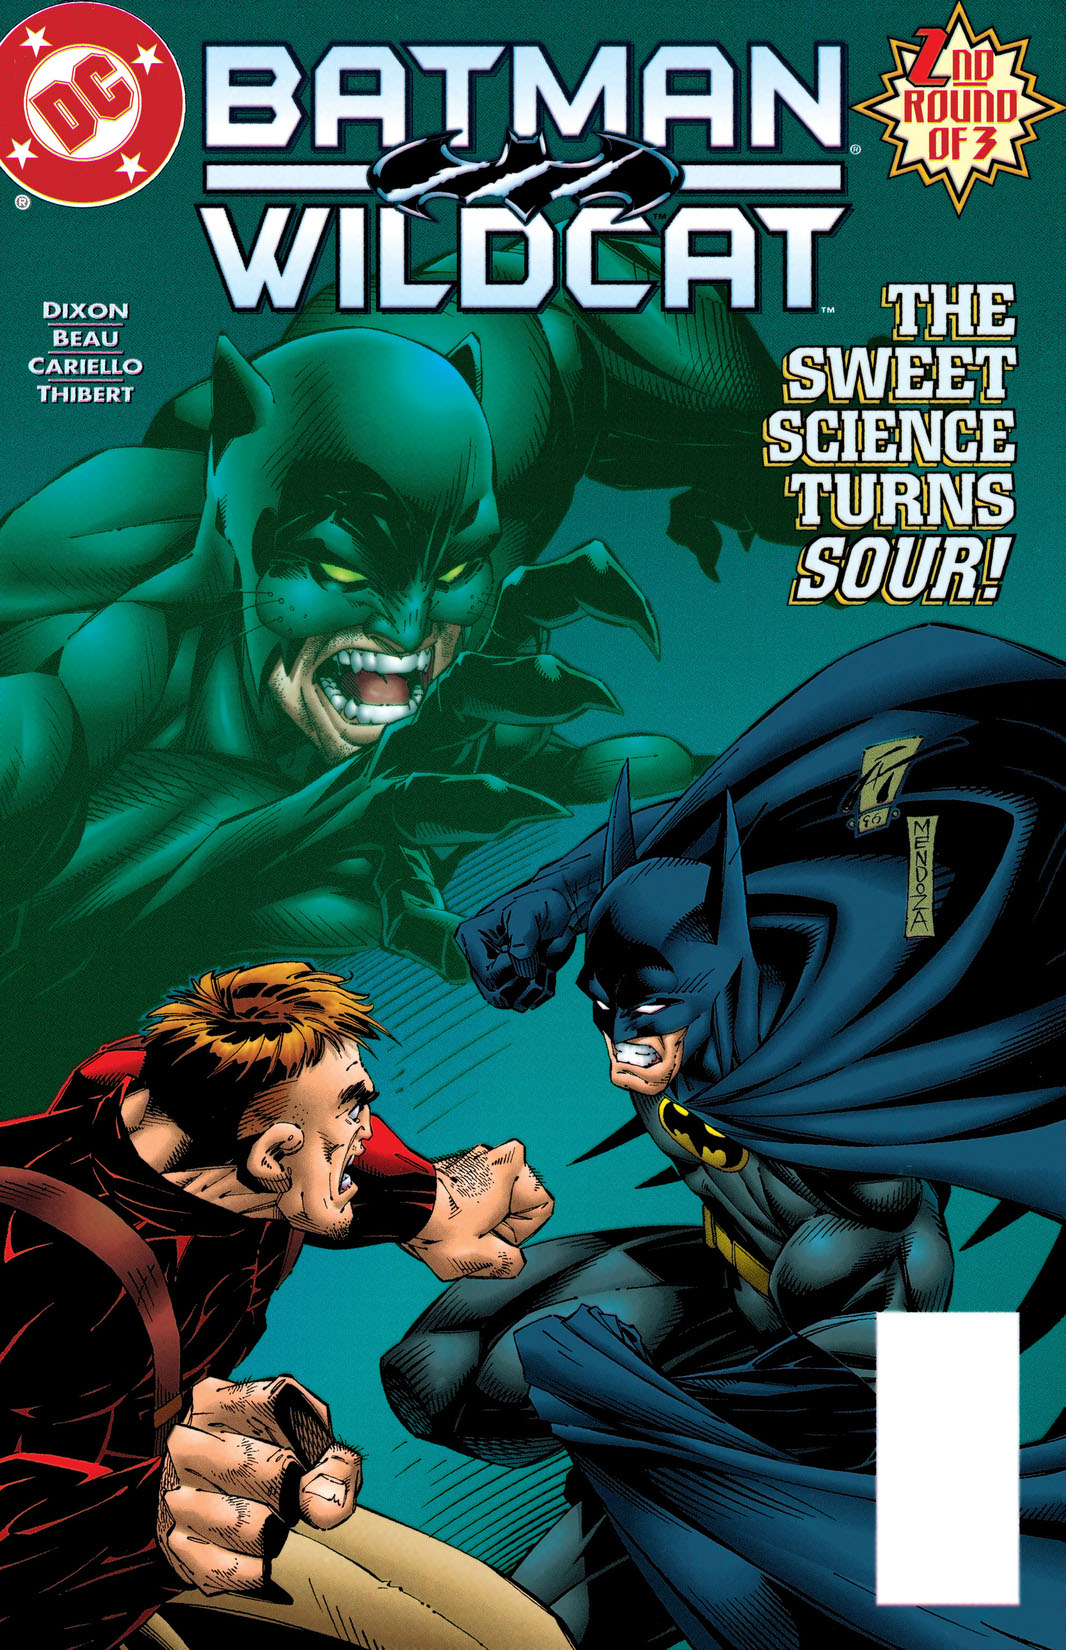 Batman/Wildcat #2 preview images